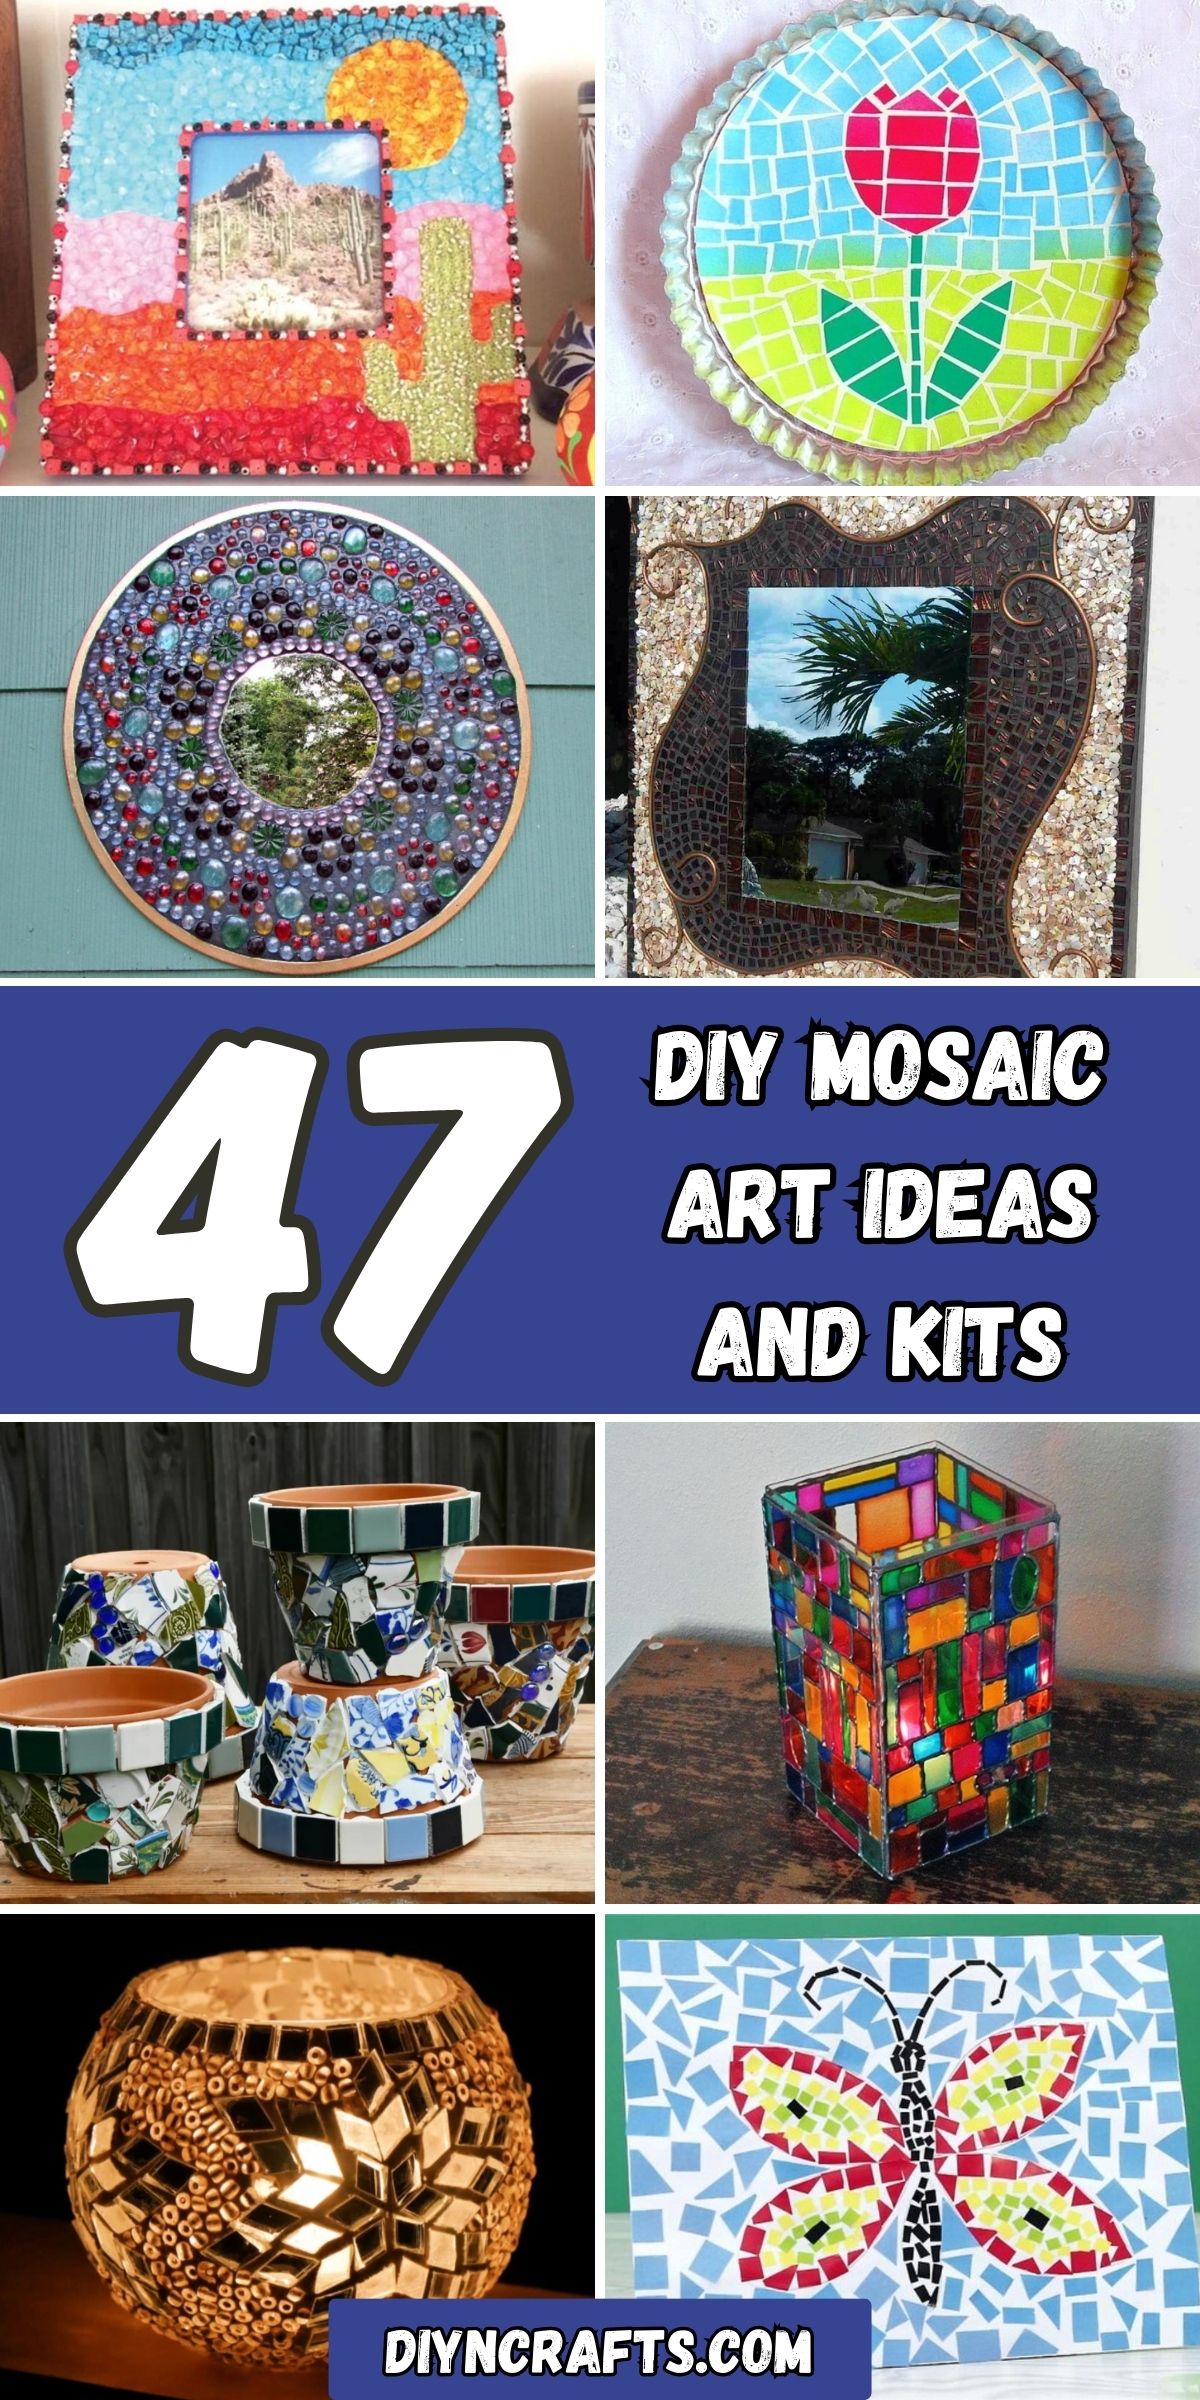 47 DIY Mosaic Art Ideas and Kits collage.